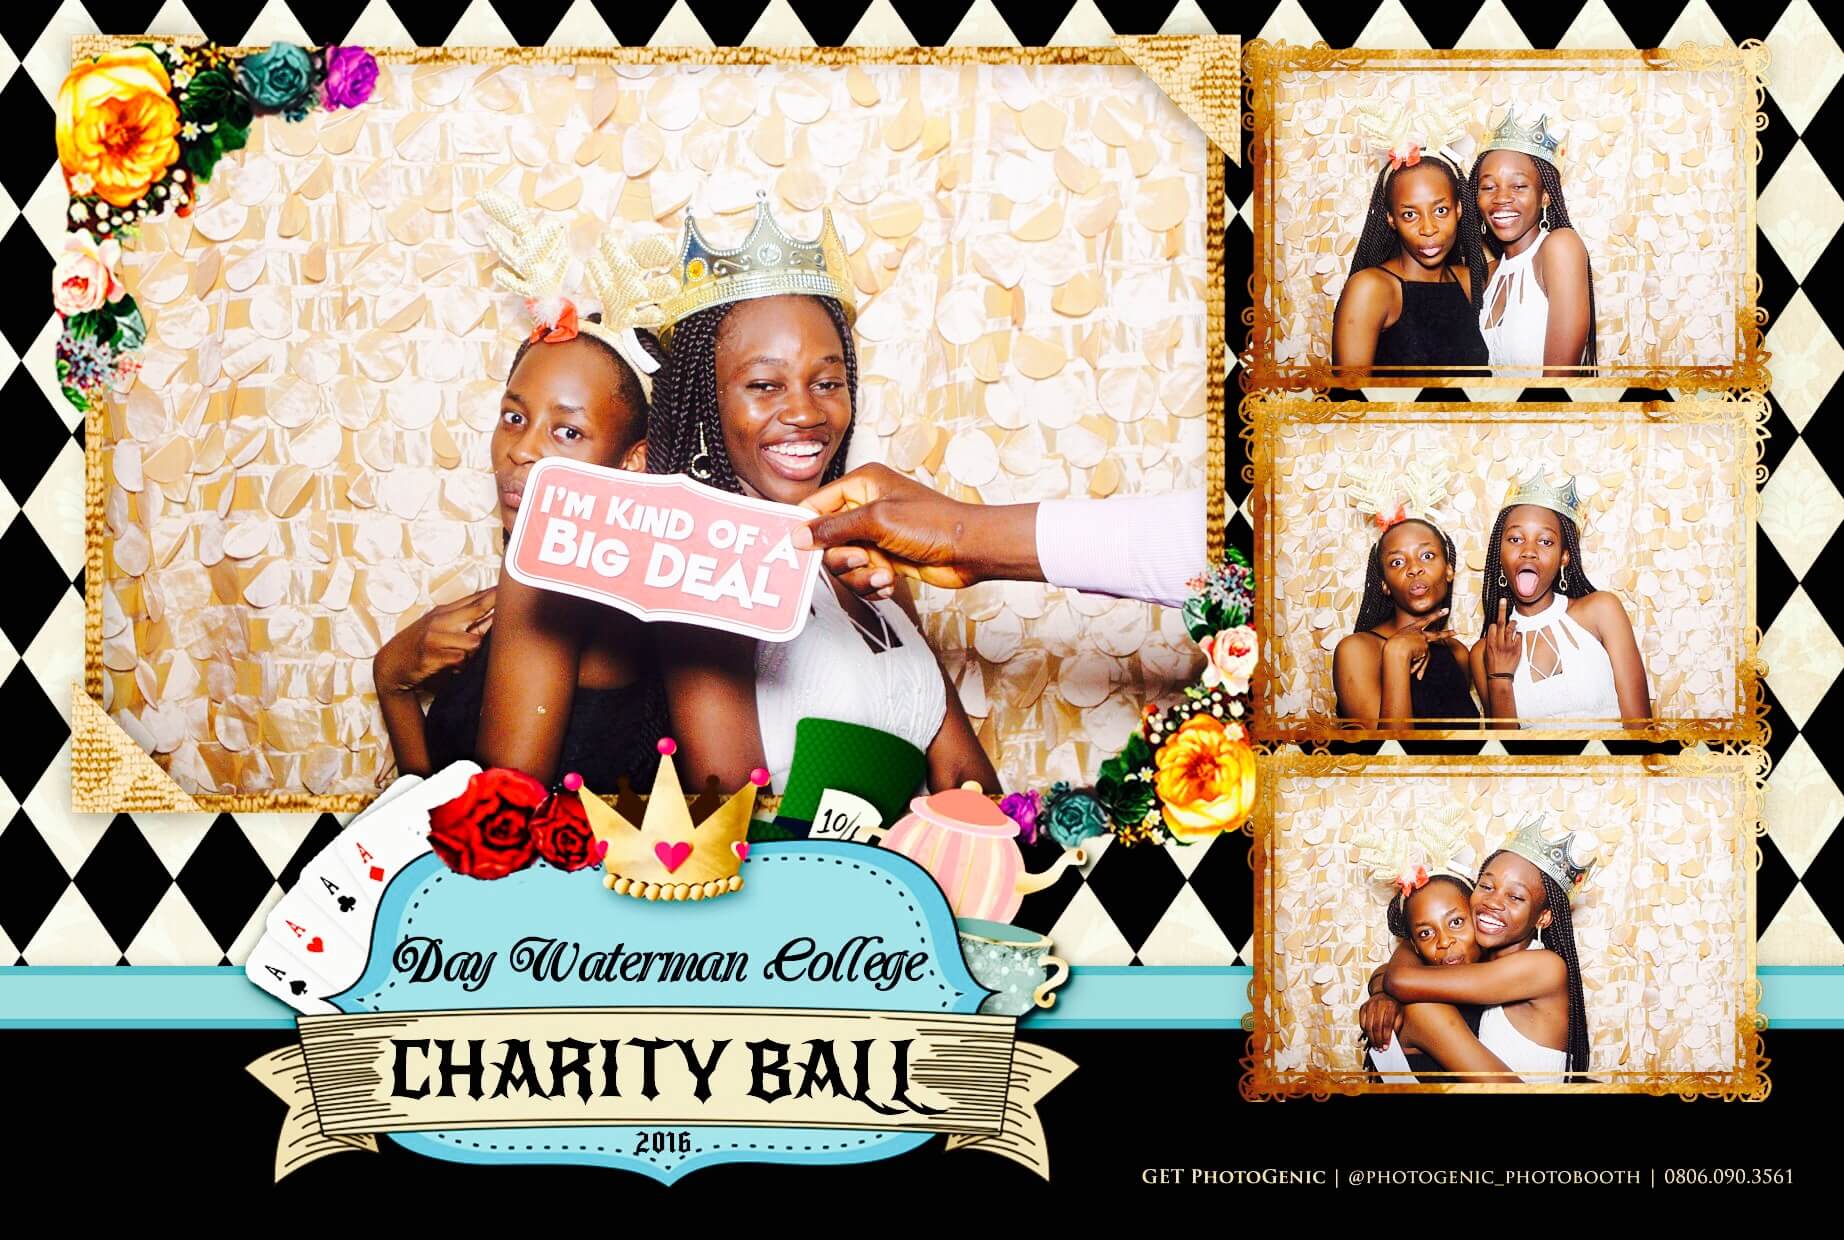 PhotoBooth in Nigeria Charity Ball